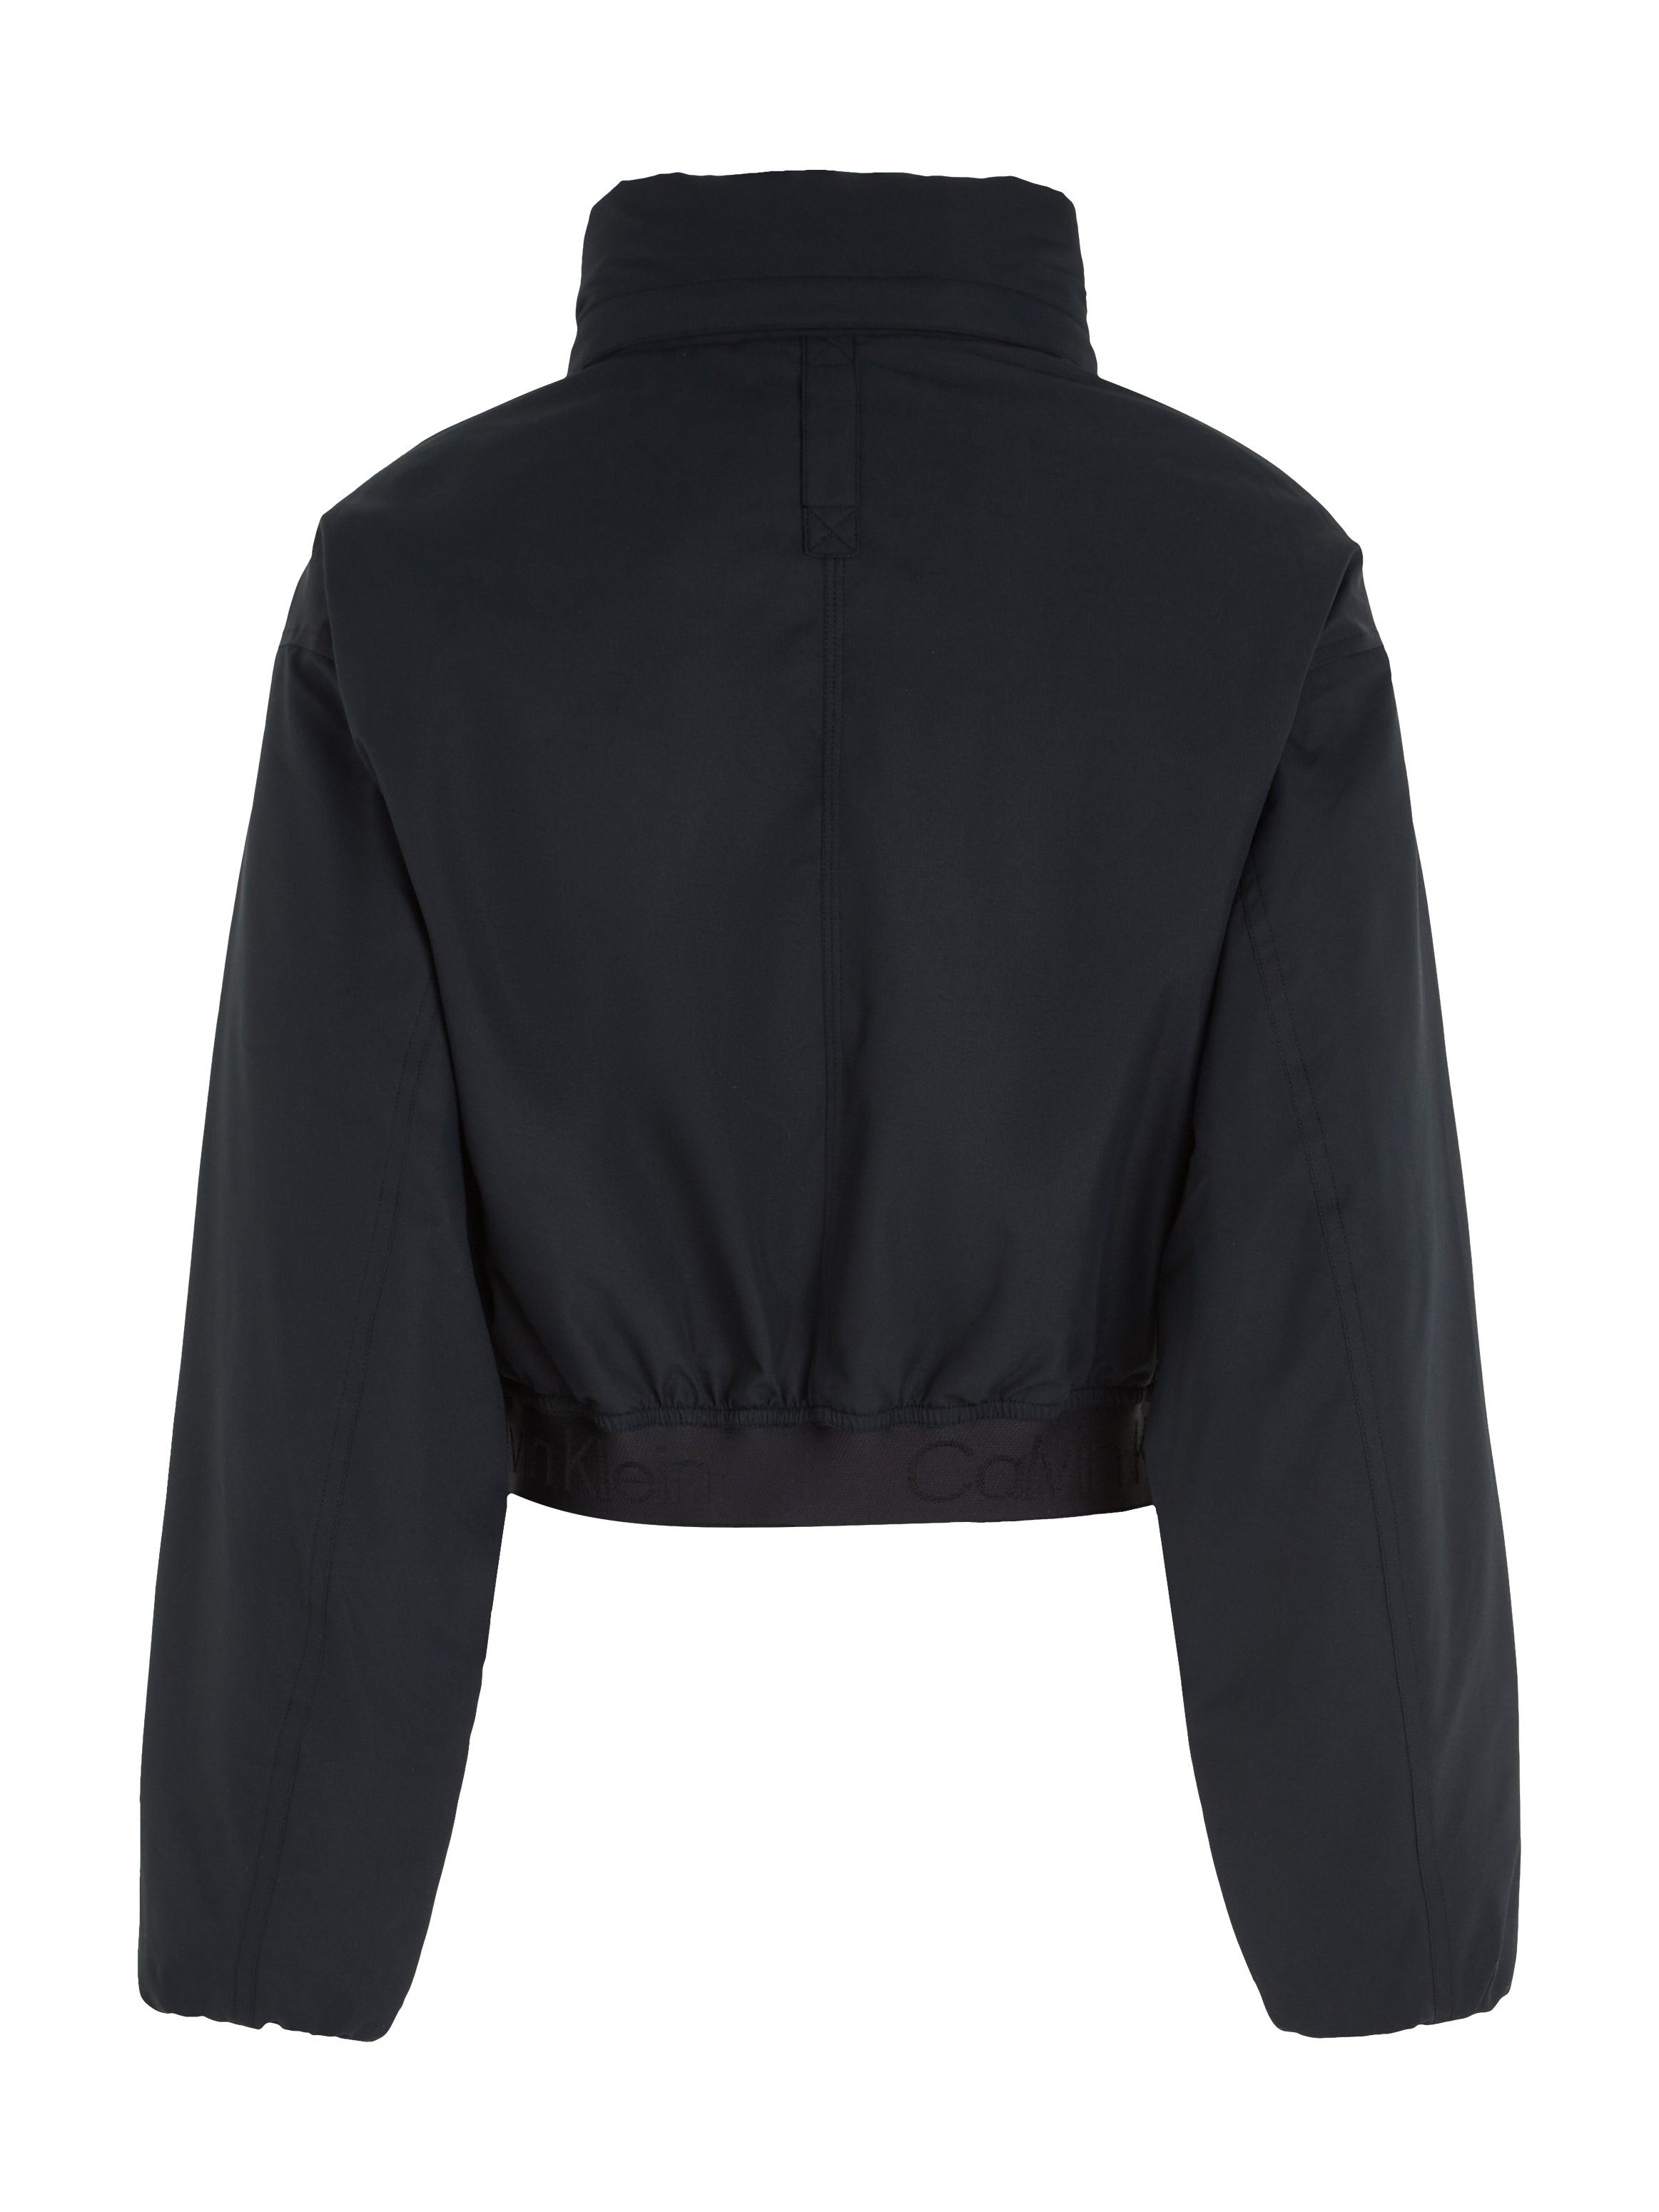 Outdoorjacke Klein Calvin Sport - Jacket schwarz Padded PW